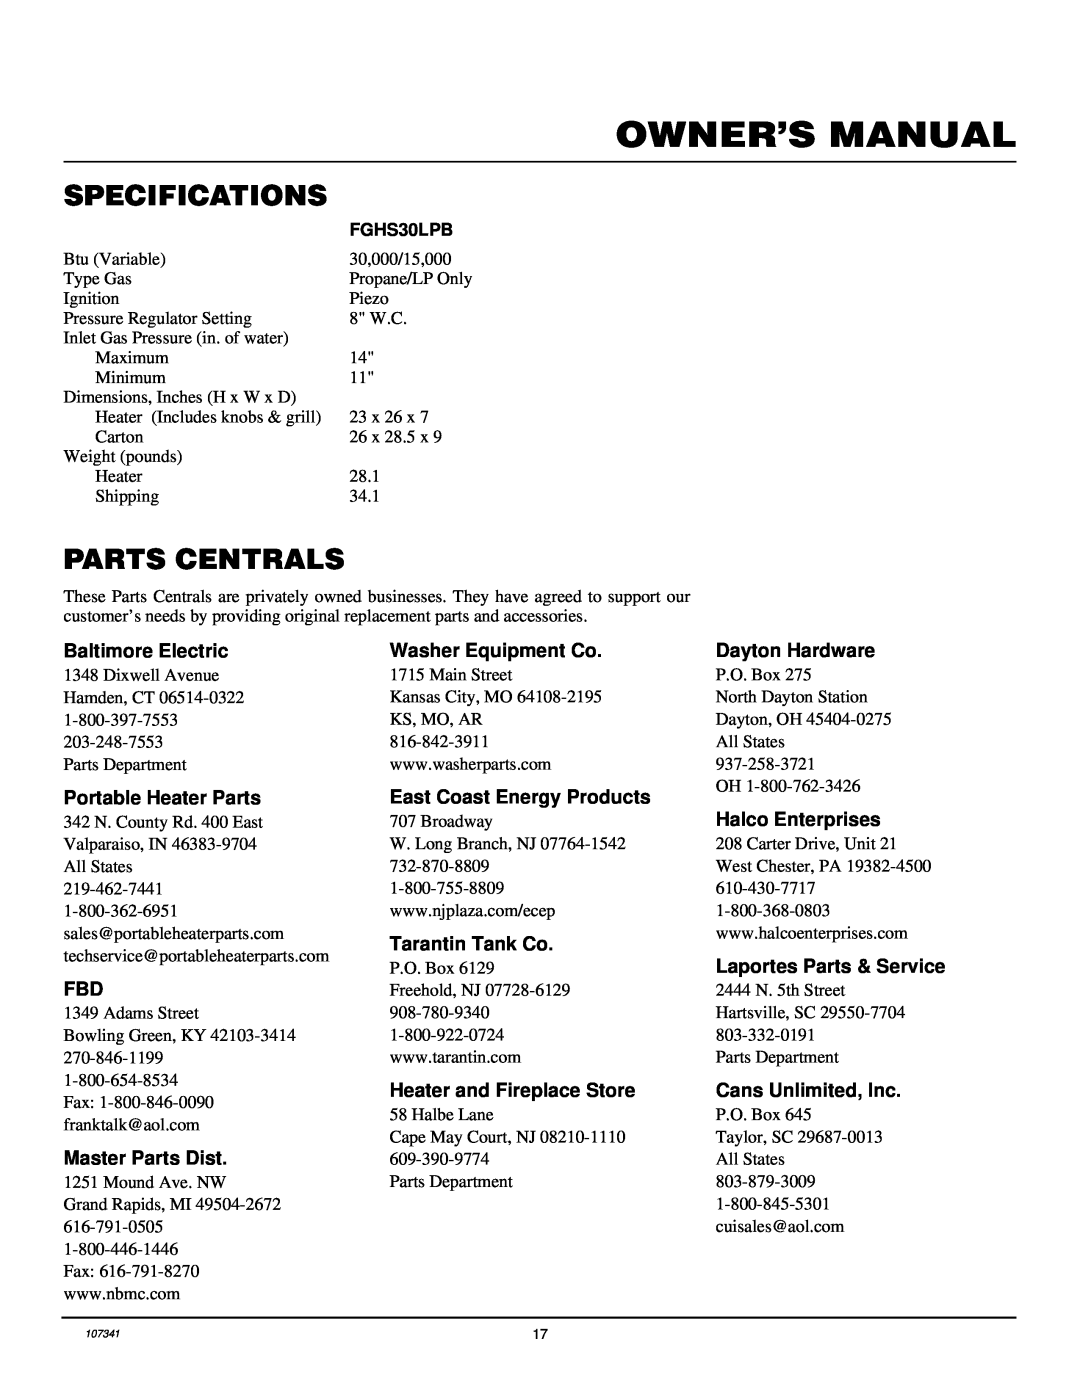 Desa FGHS30LPB Specifications, Parts Centrals, Baltimore Electric, Portable Heater Parts, Master Parts Dist 